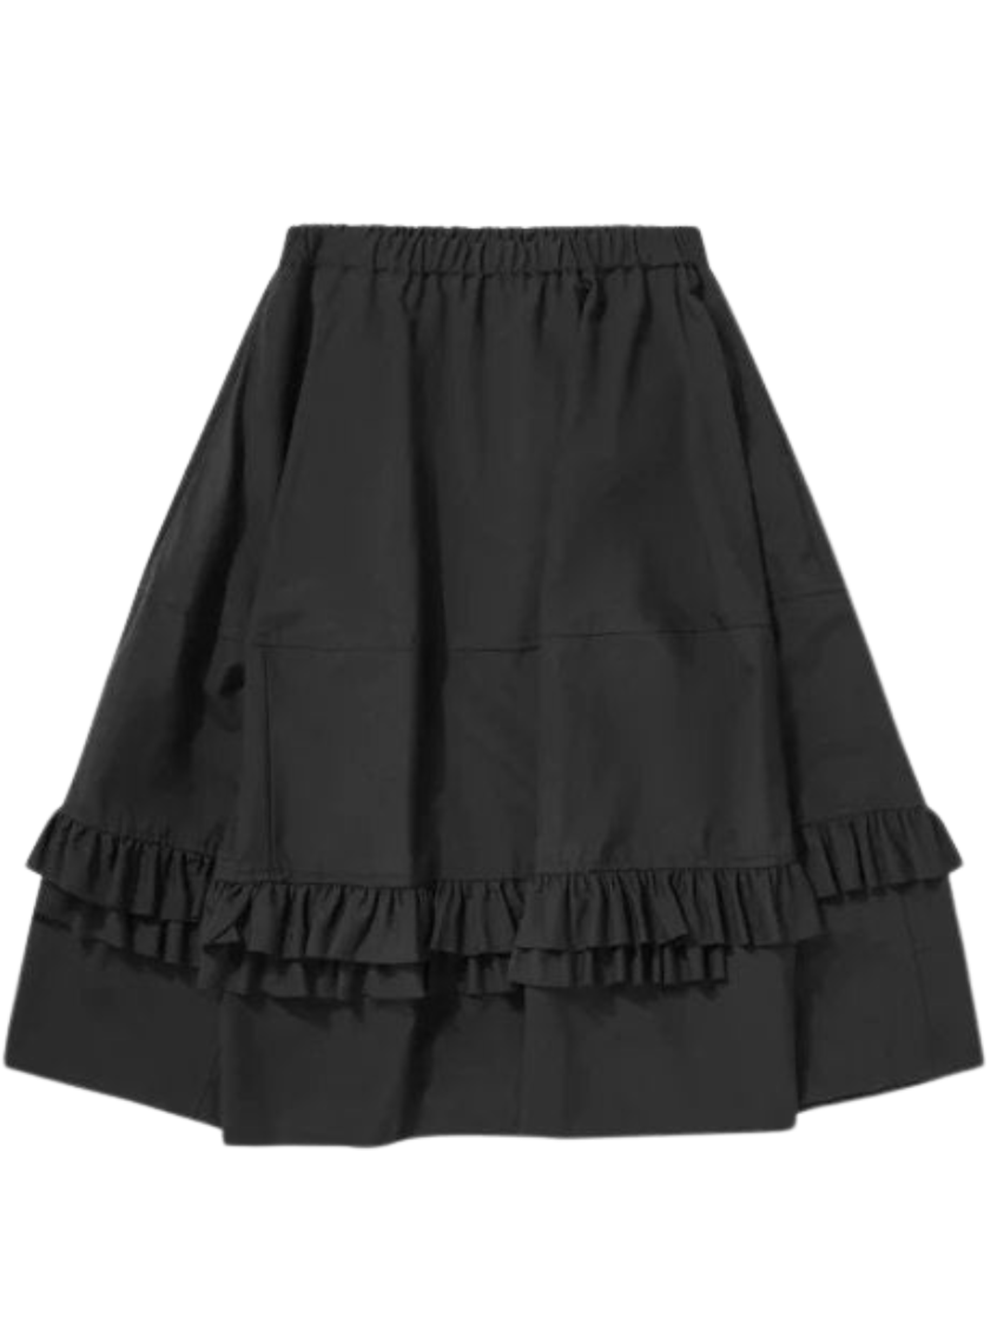 COMME-des-GARCONS-BLACK-Elastic-Ruffled-Skirt-Black-1